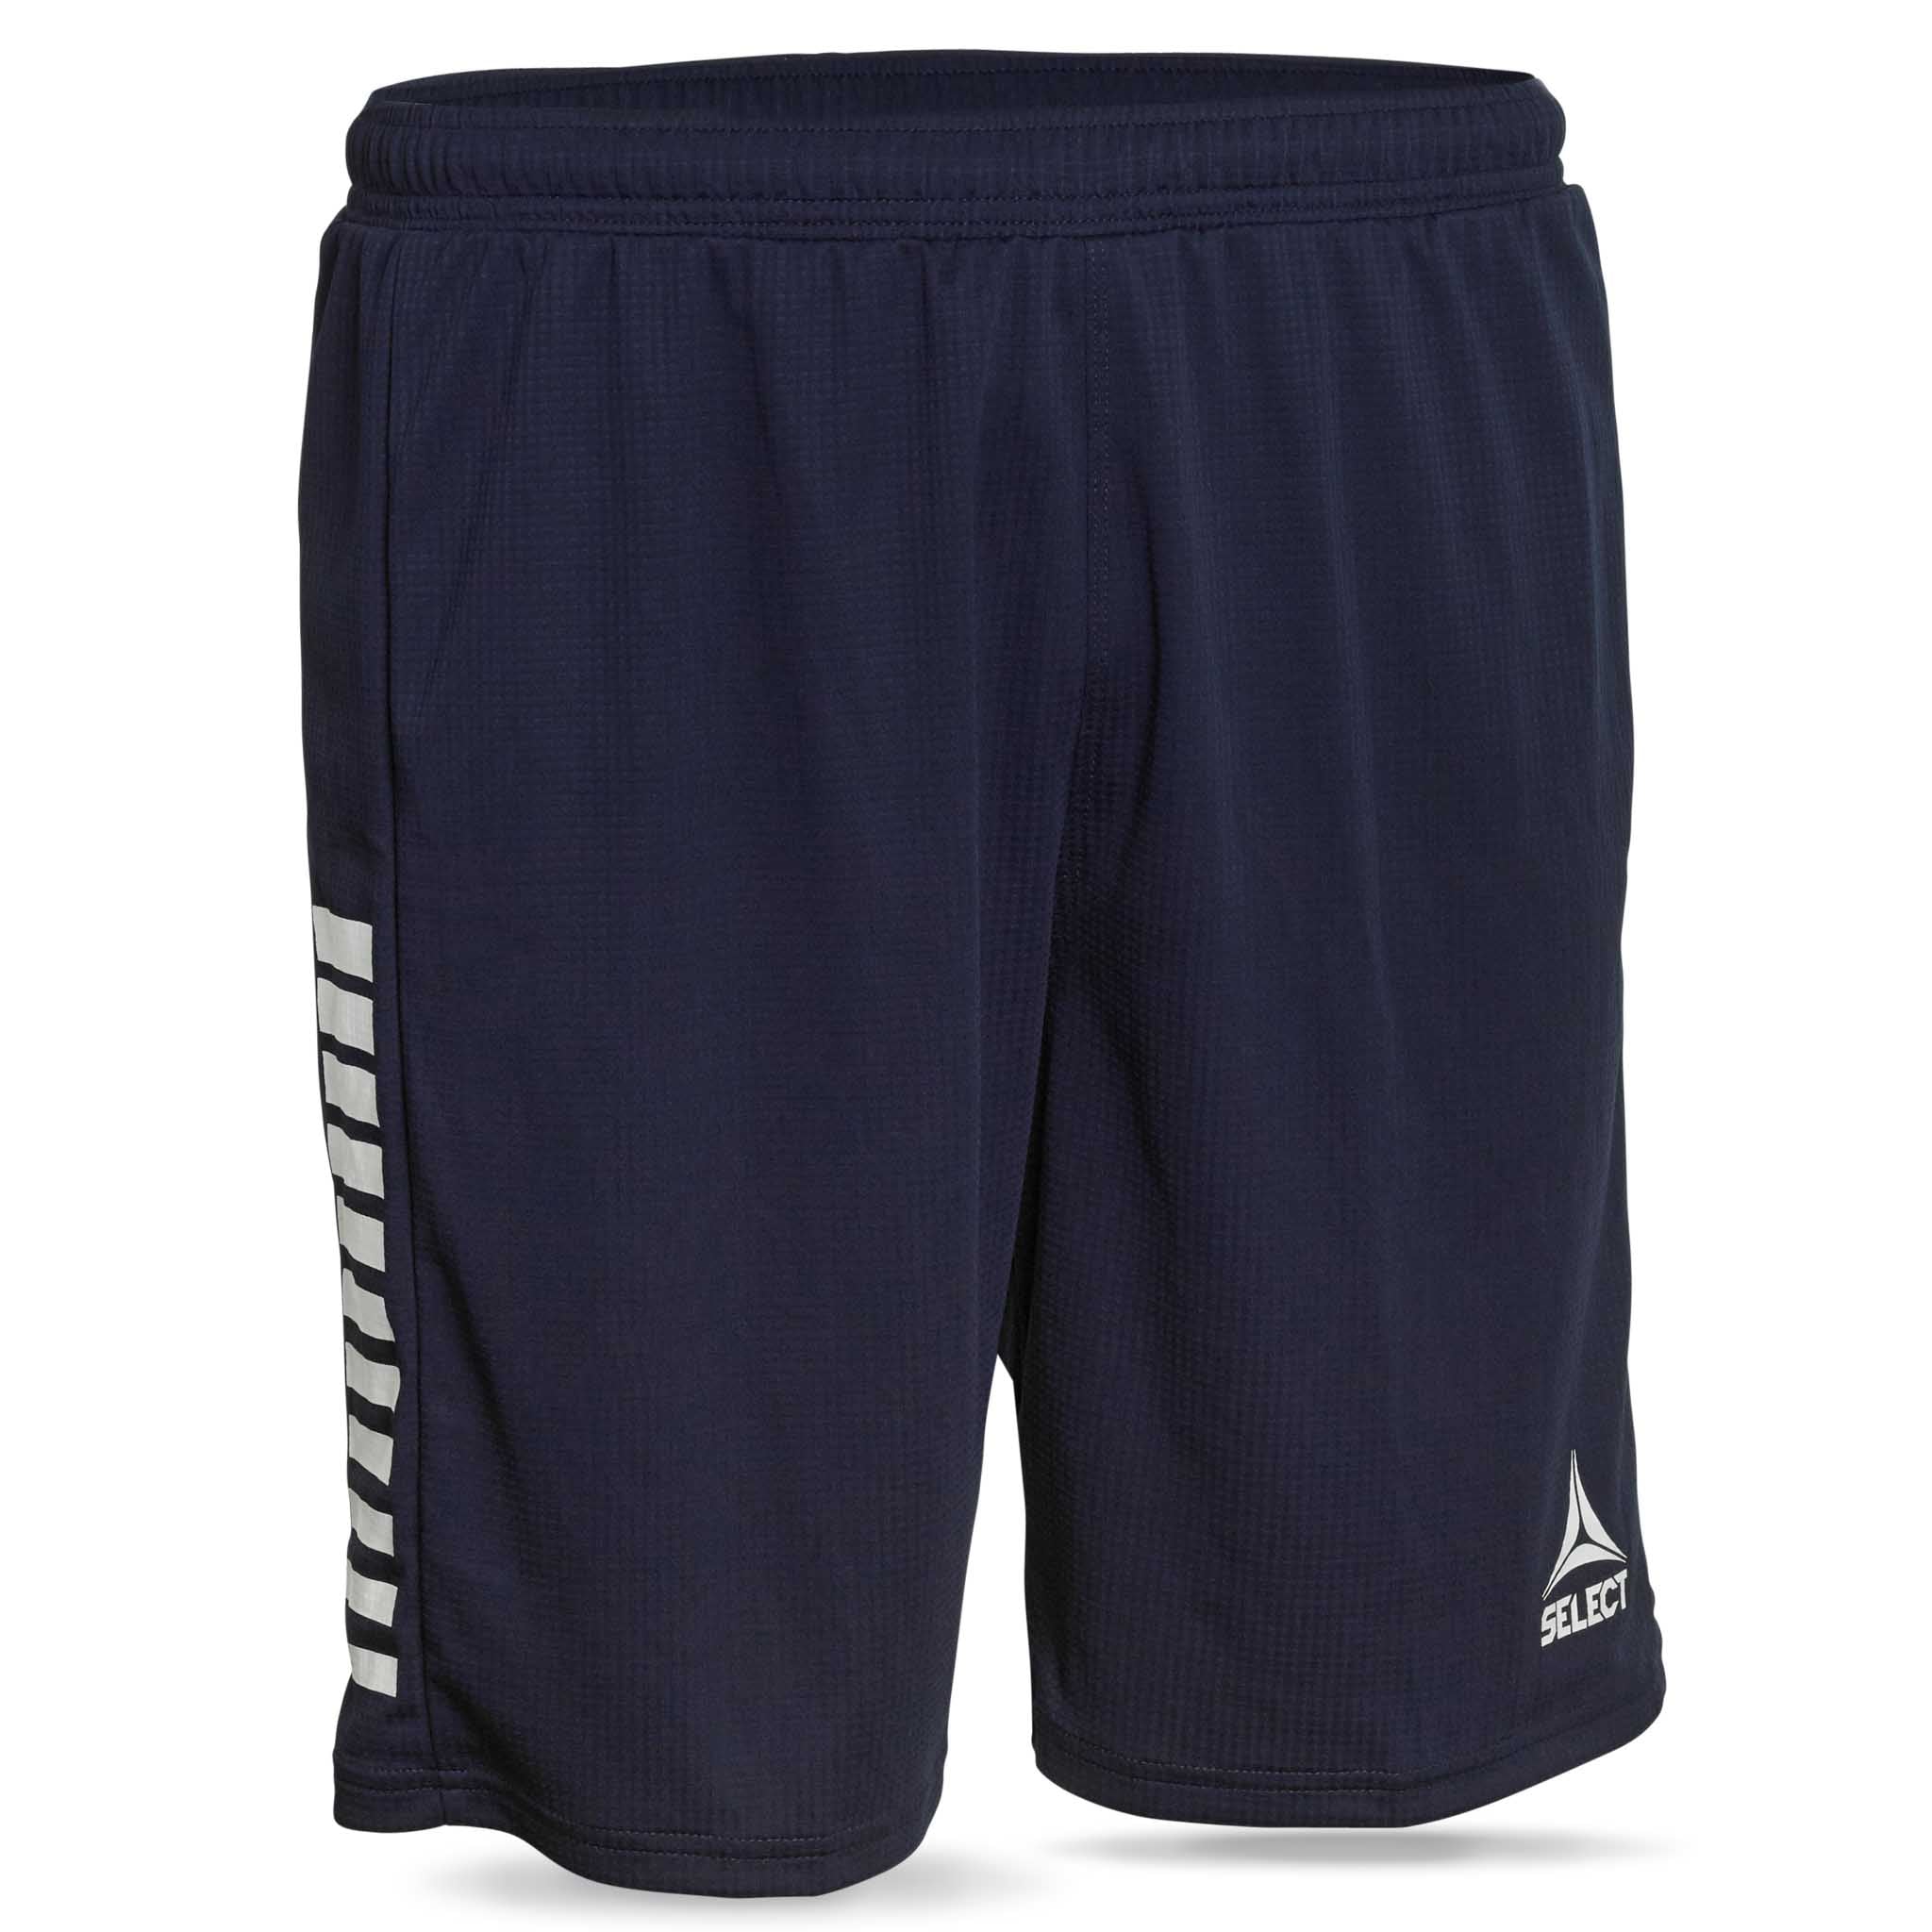 Player shorts - Monaco #colour_navy